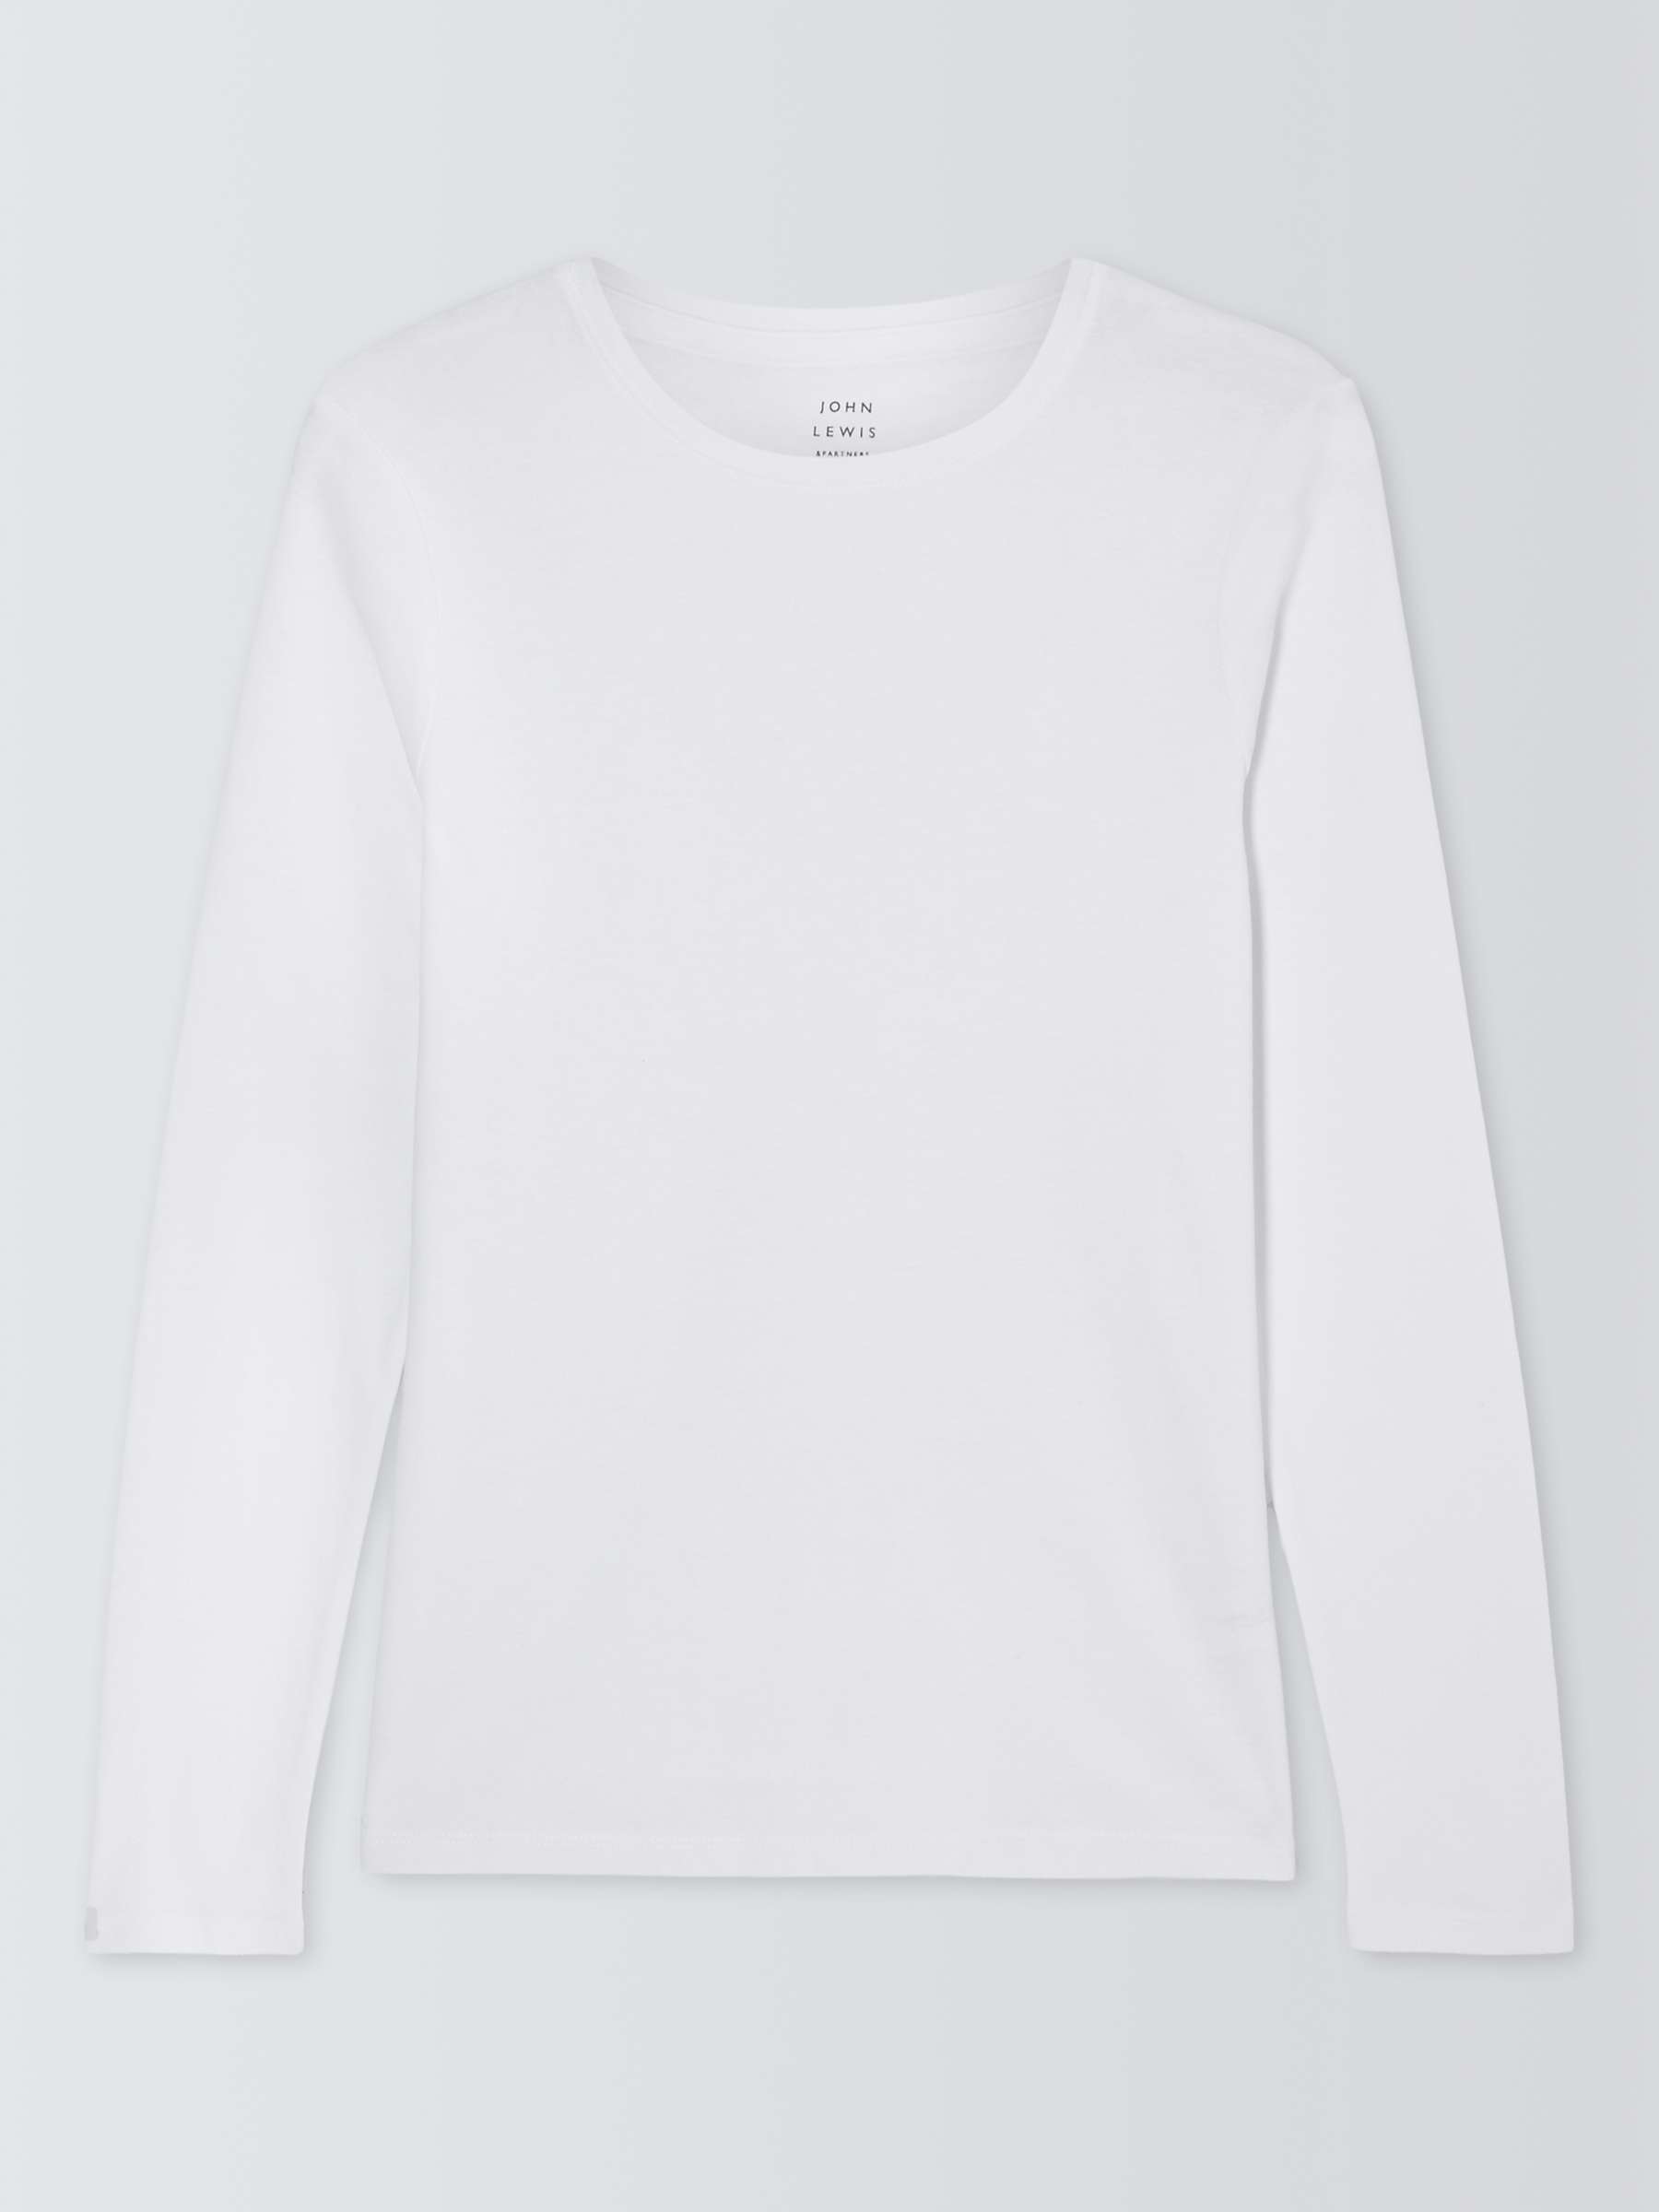 Buy John Lewis Organic Cotton Long Sleeve Crew Neck T-Shirt Online at johnlewis.com